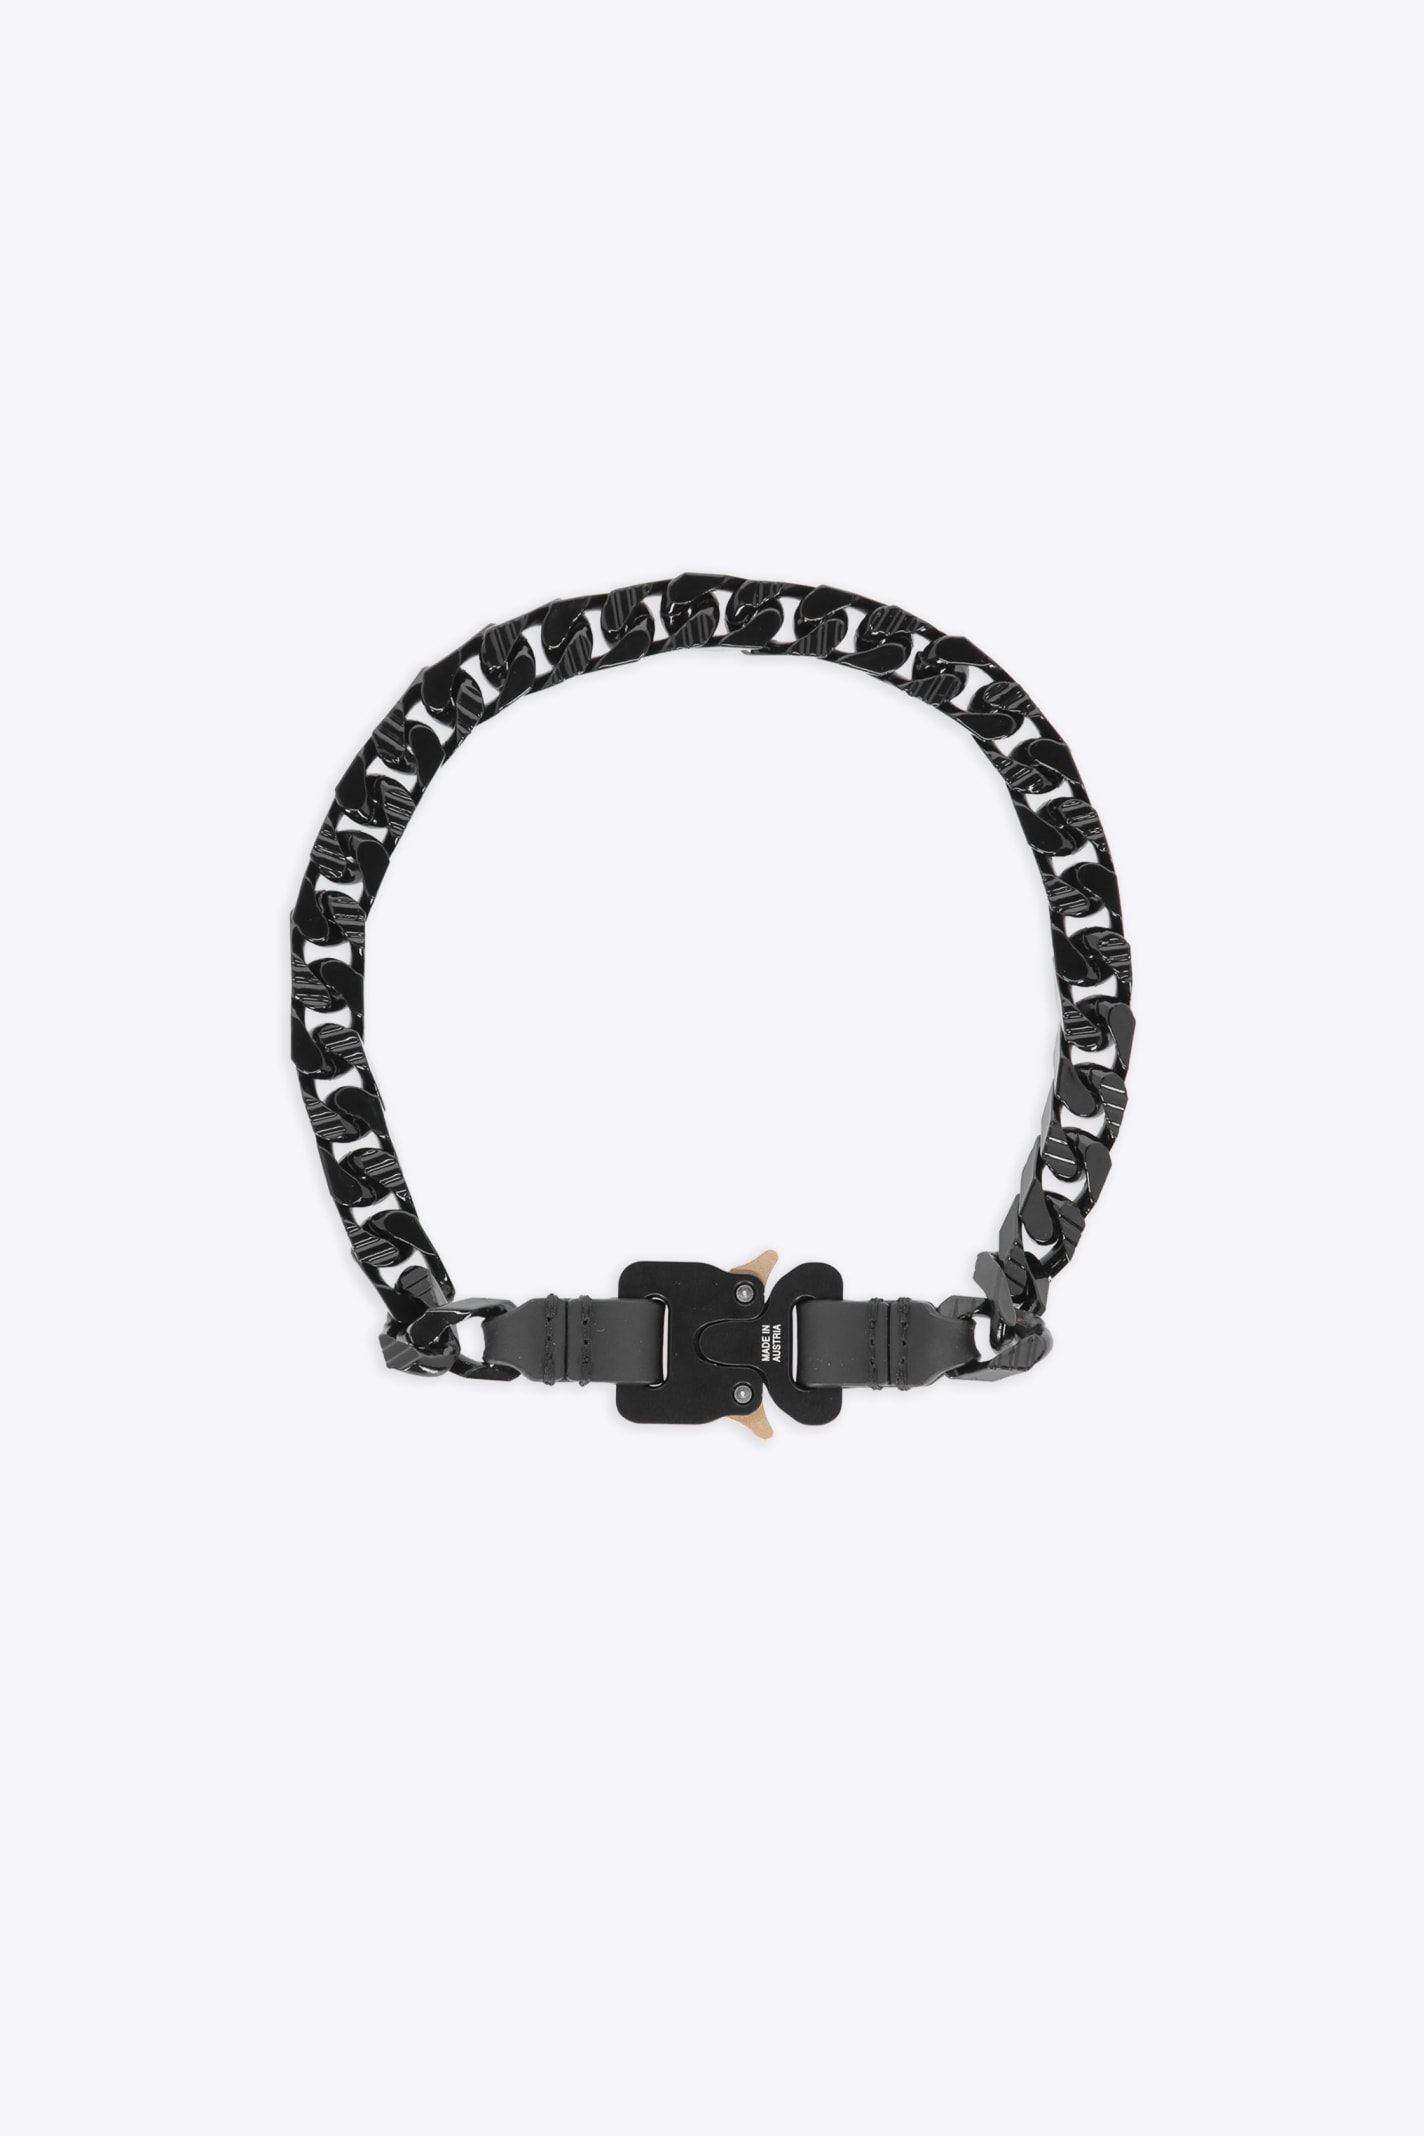 Shop Alyx Colored Chain Necklace Black Metal Chain Necklace With Rollercoaster Buckle - Colored Chain Necklace